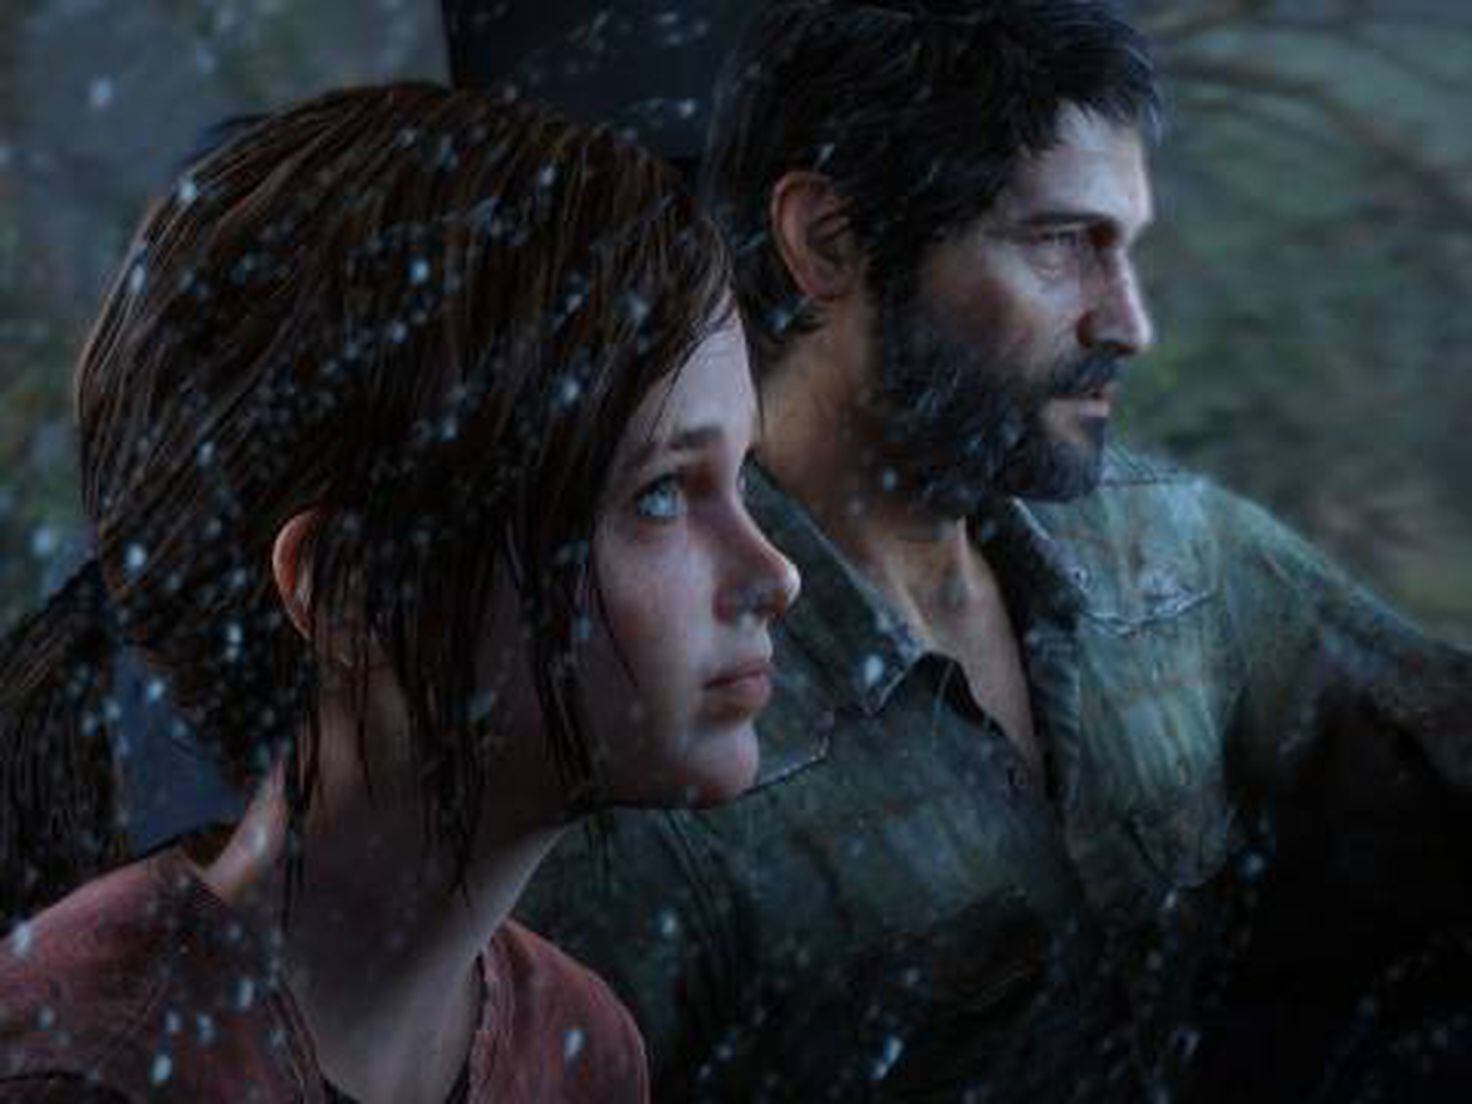 The Last Of Us Part II 2021 4k Wallpaper,HD Games Wallpapers,4k